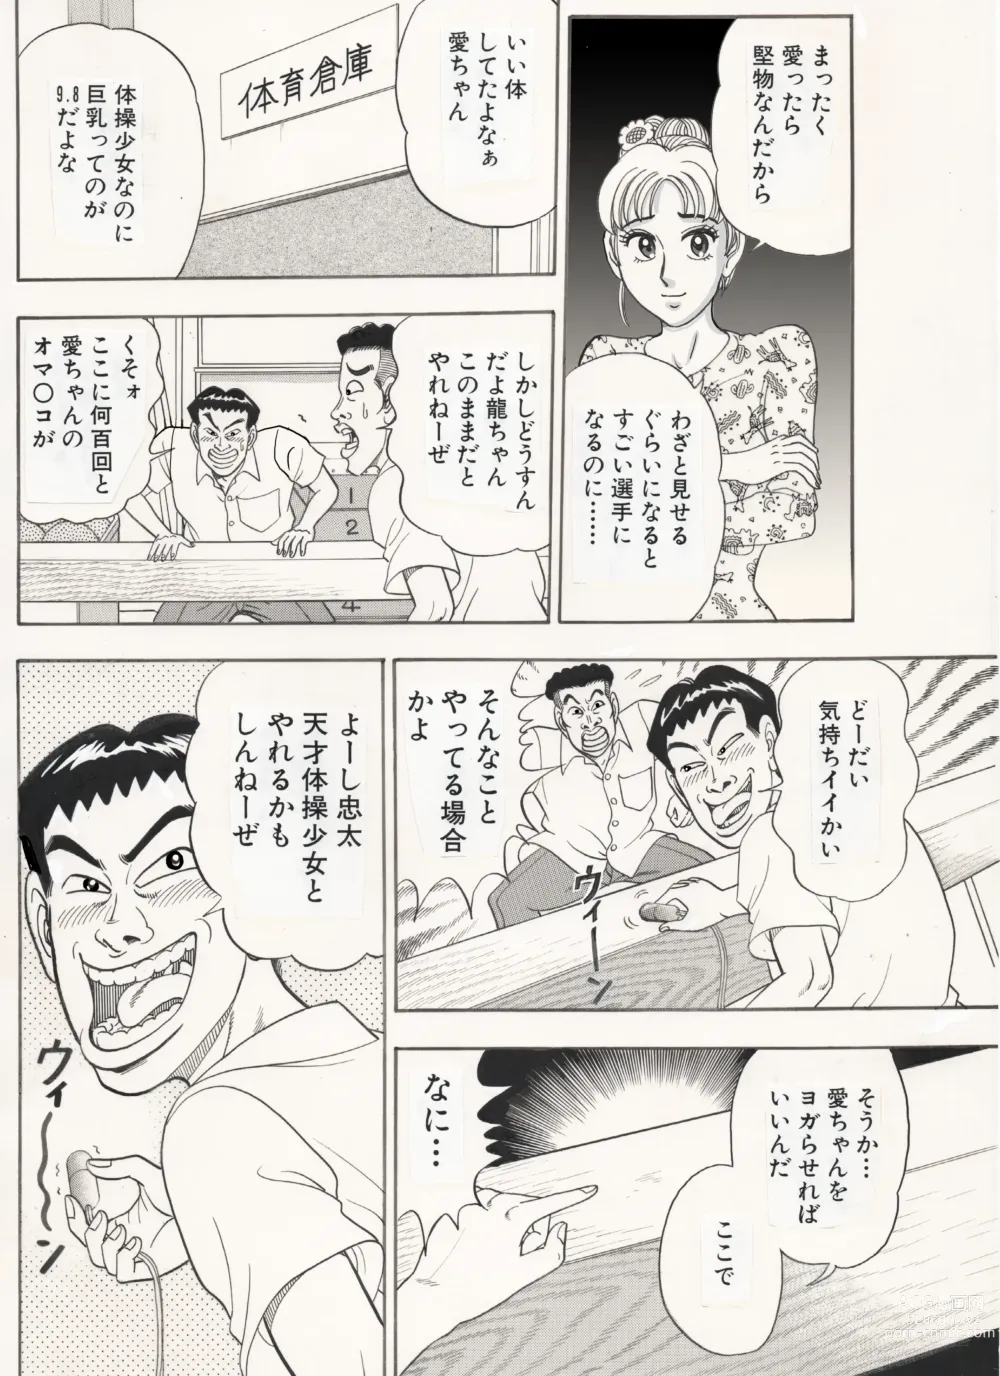 Page 10 of doujinshi Taisou Joshi… Midareru.